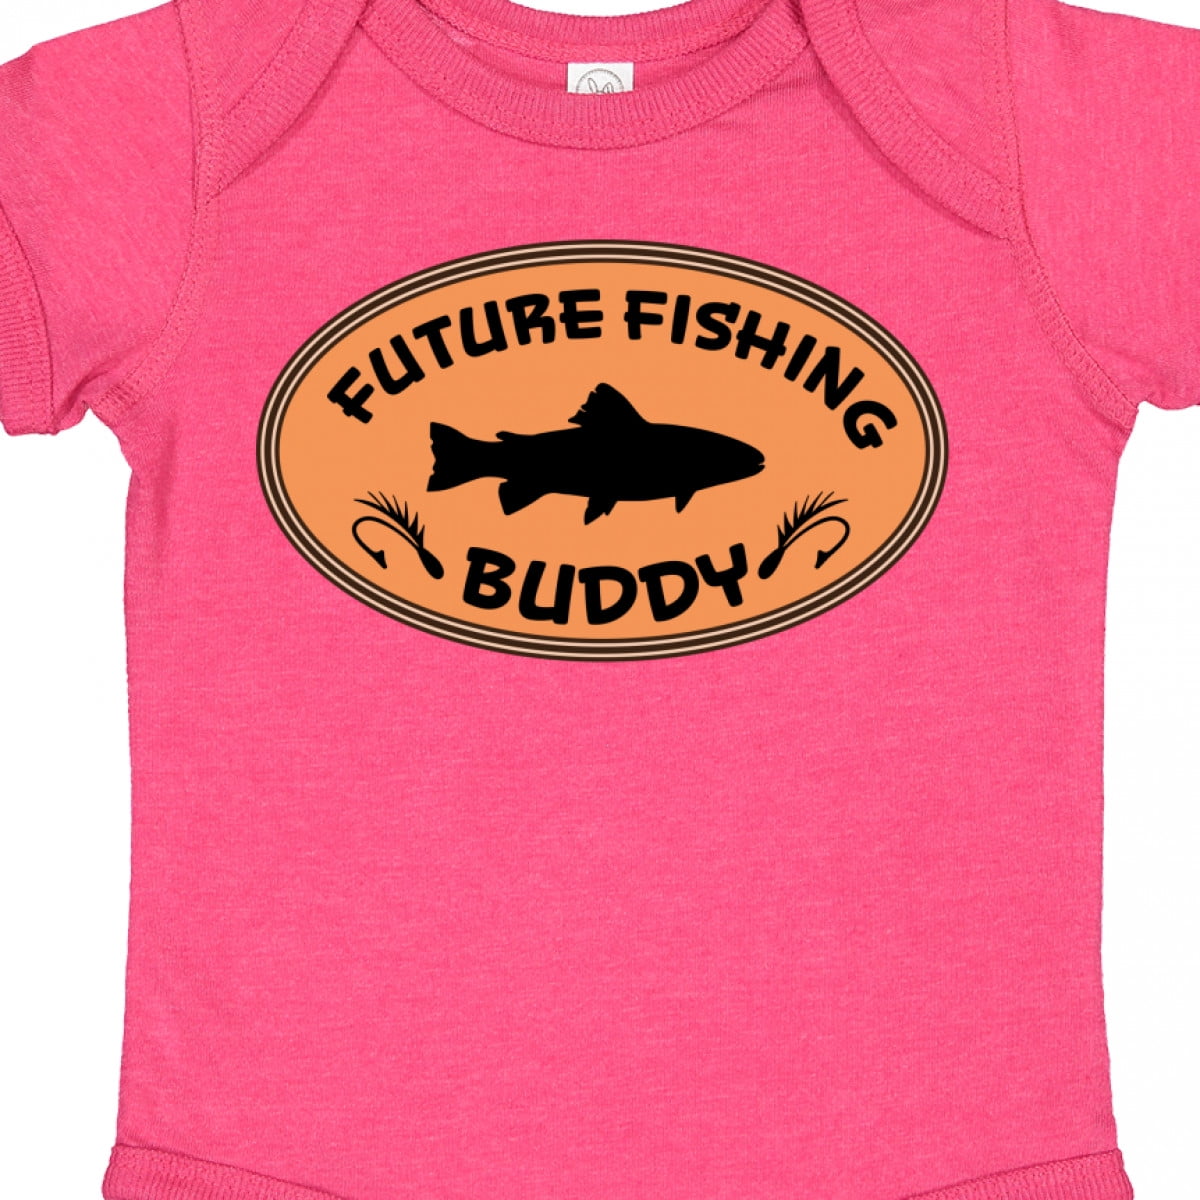 Bass Pro Shops Future Fishing Buddy Short-Sleeve Bodysuit for